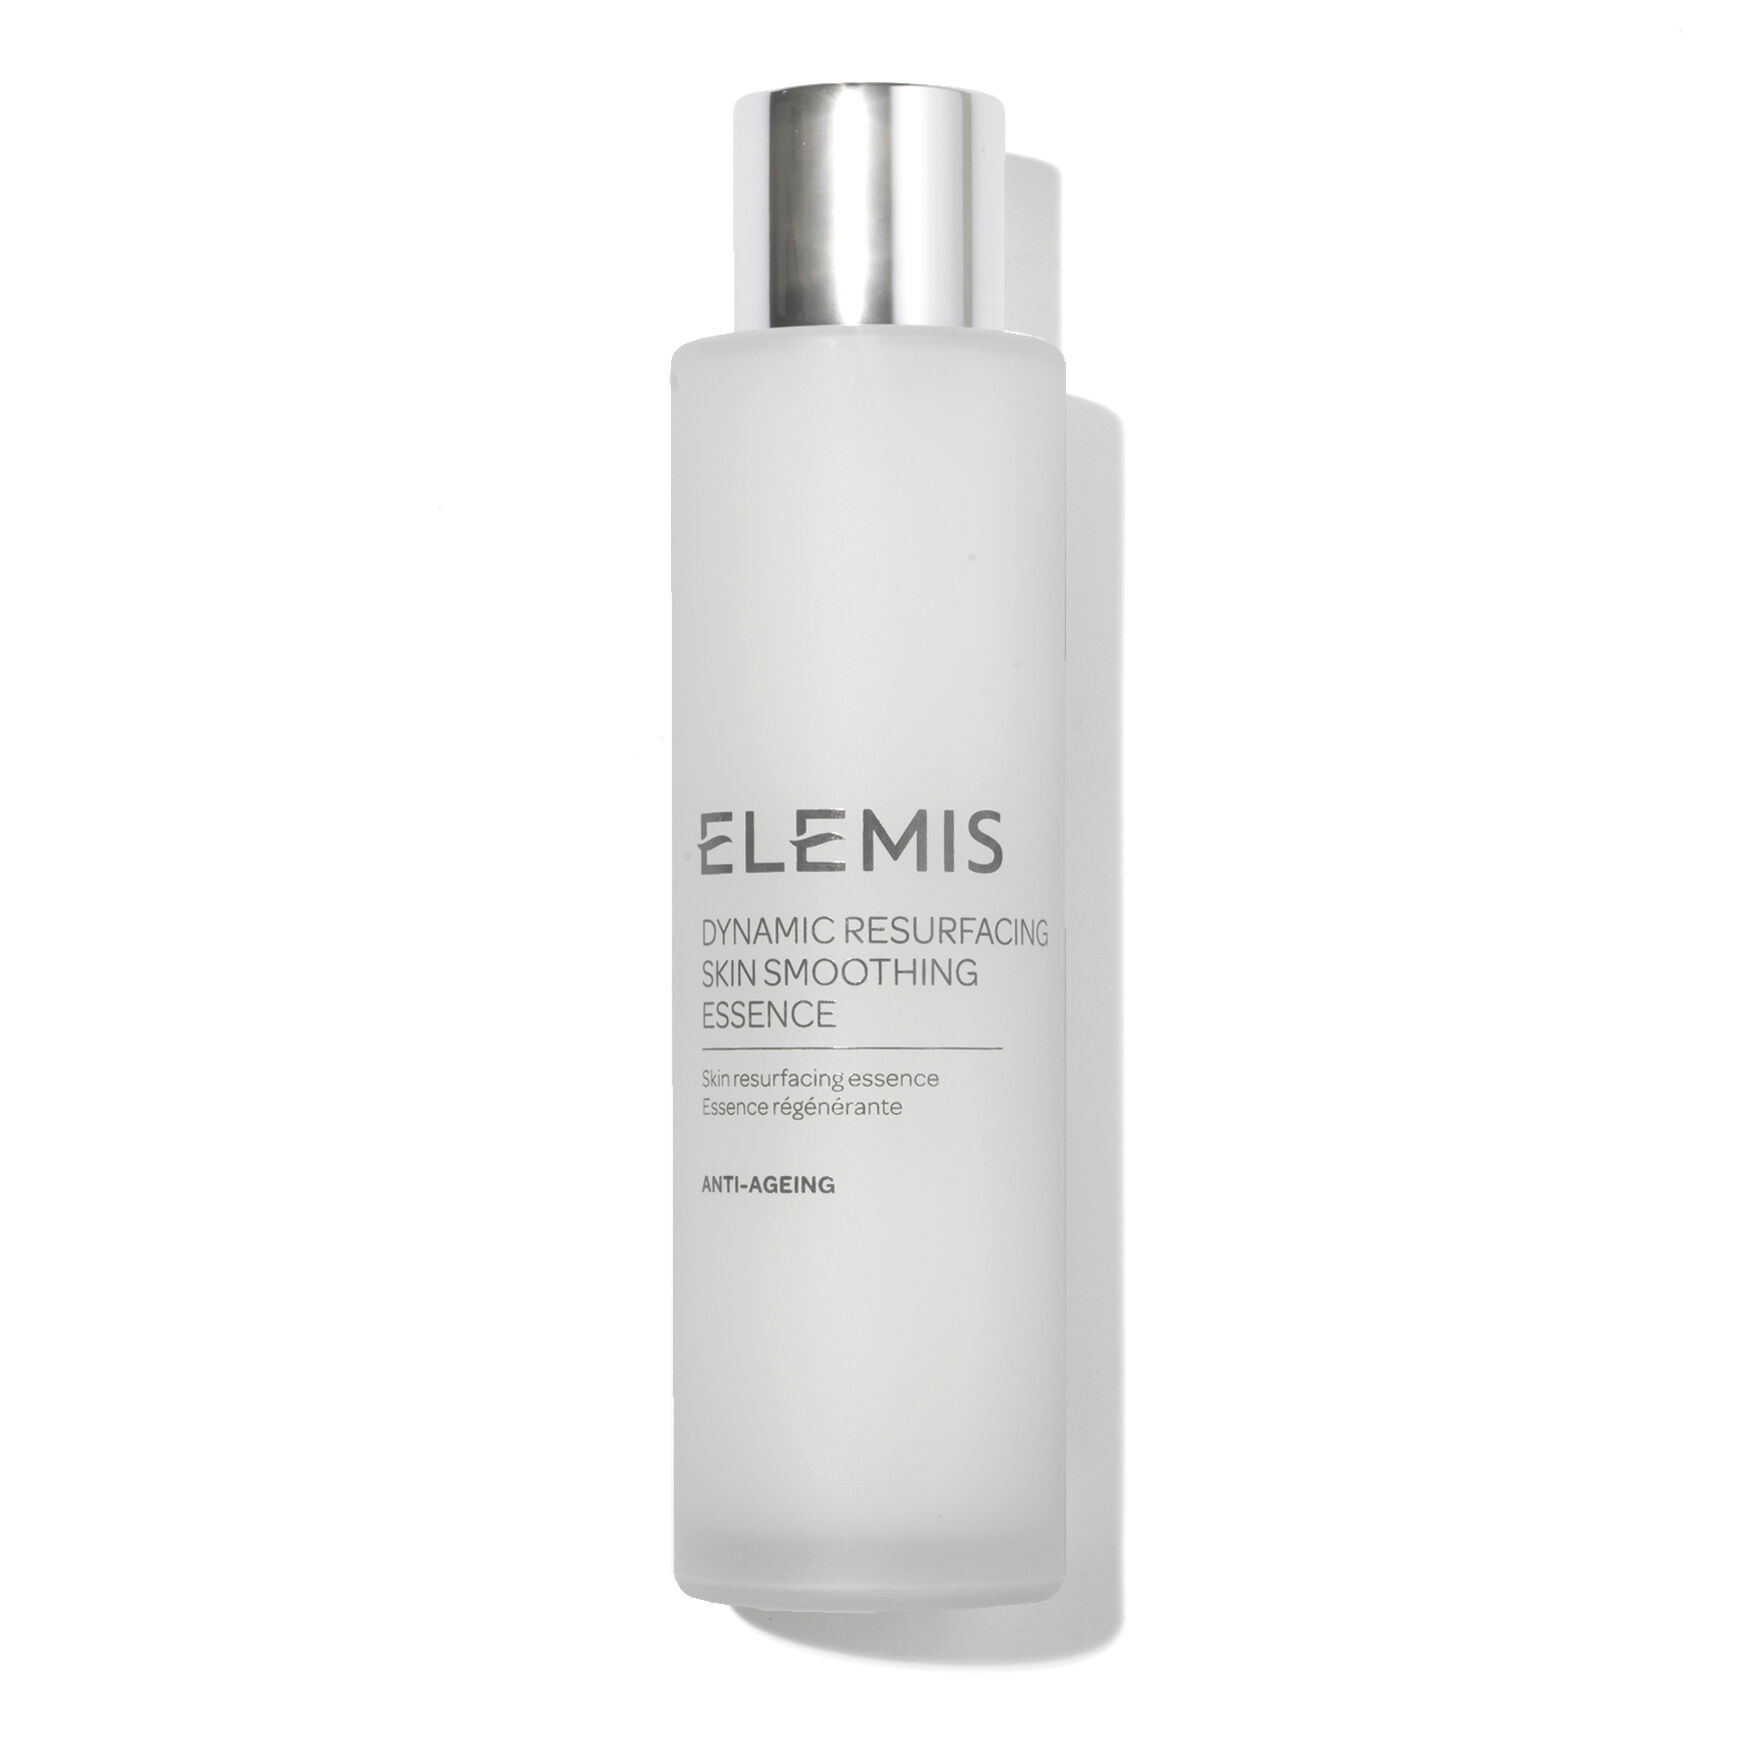 ELEMIS - Dynamic Resurfacing Skin Smoothing Essence